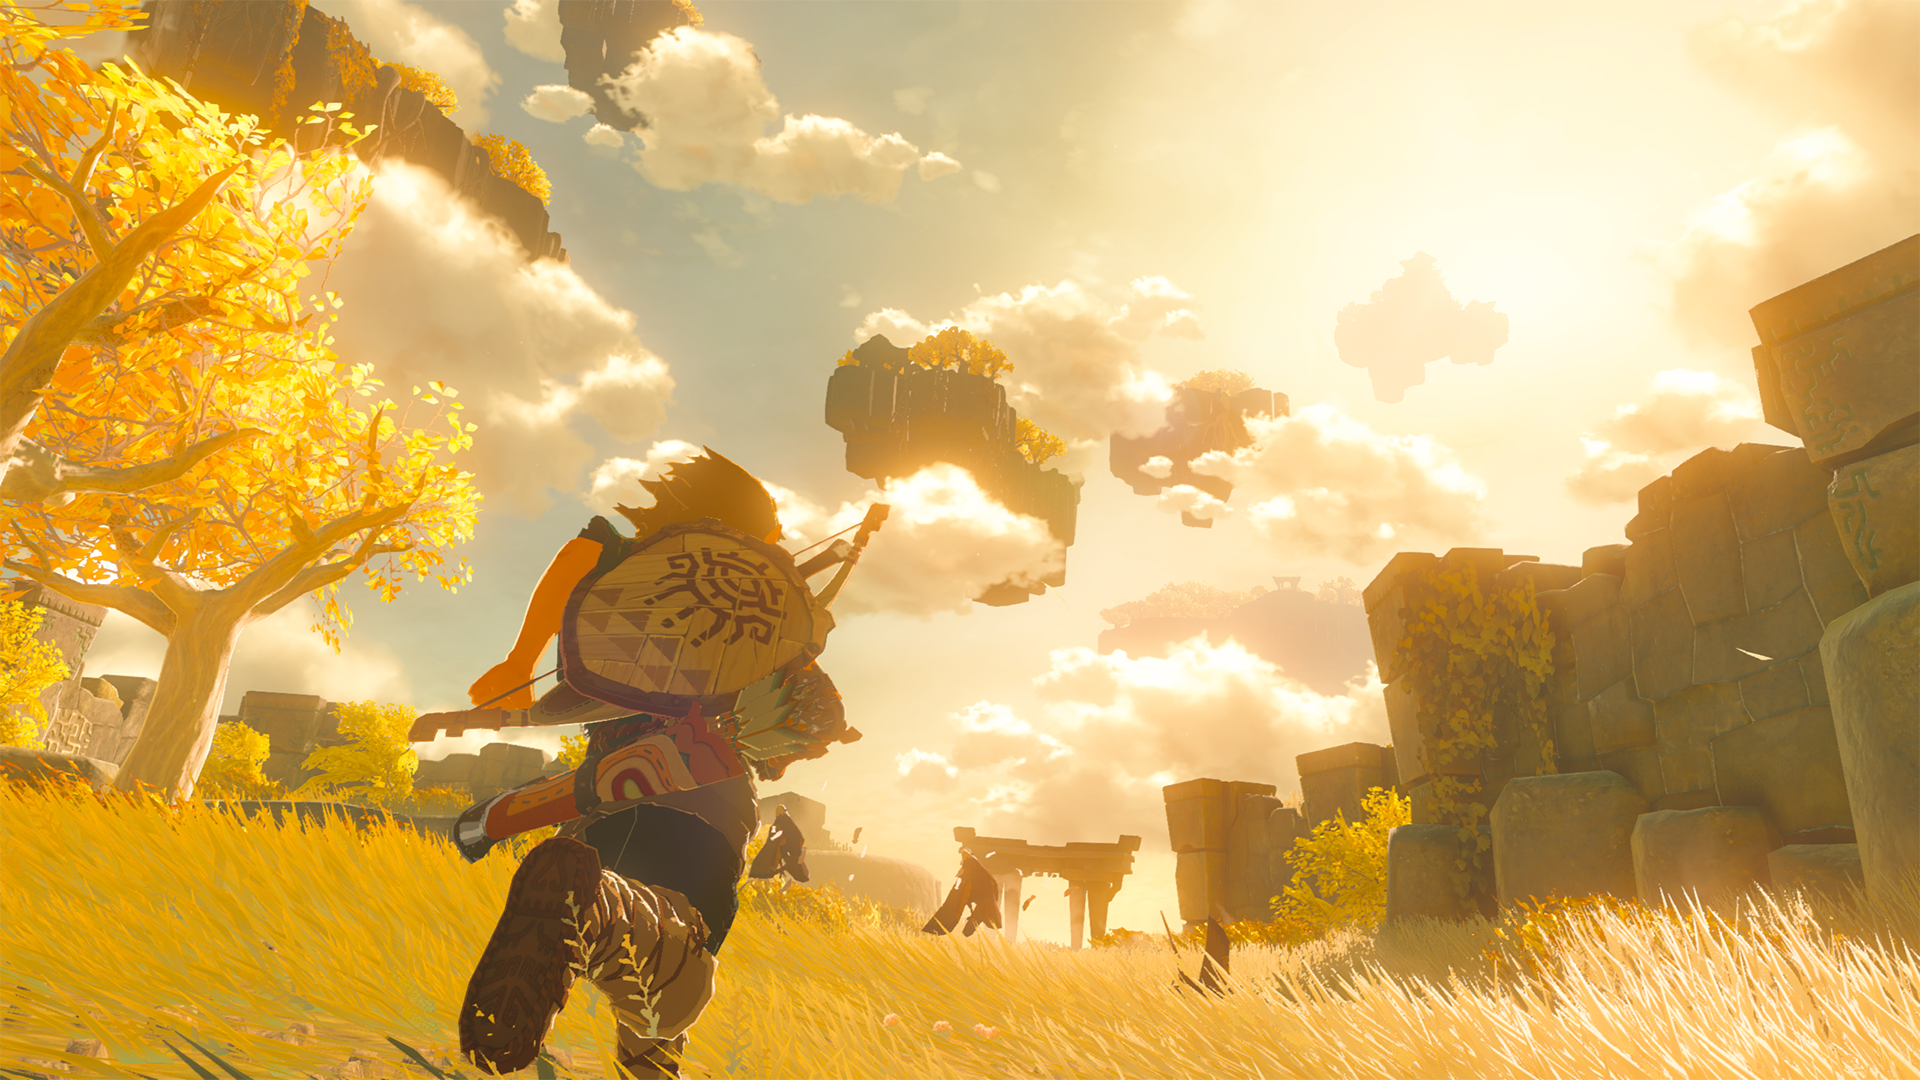 Link running through a field in Zelda: Breath of the Wild 2